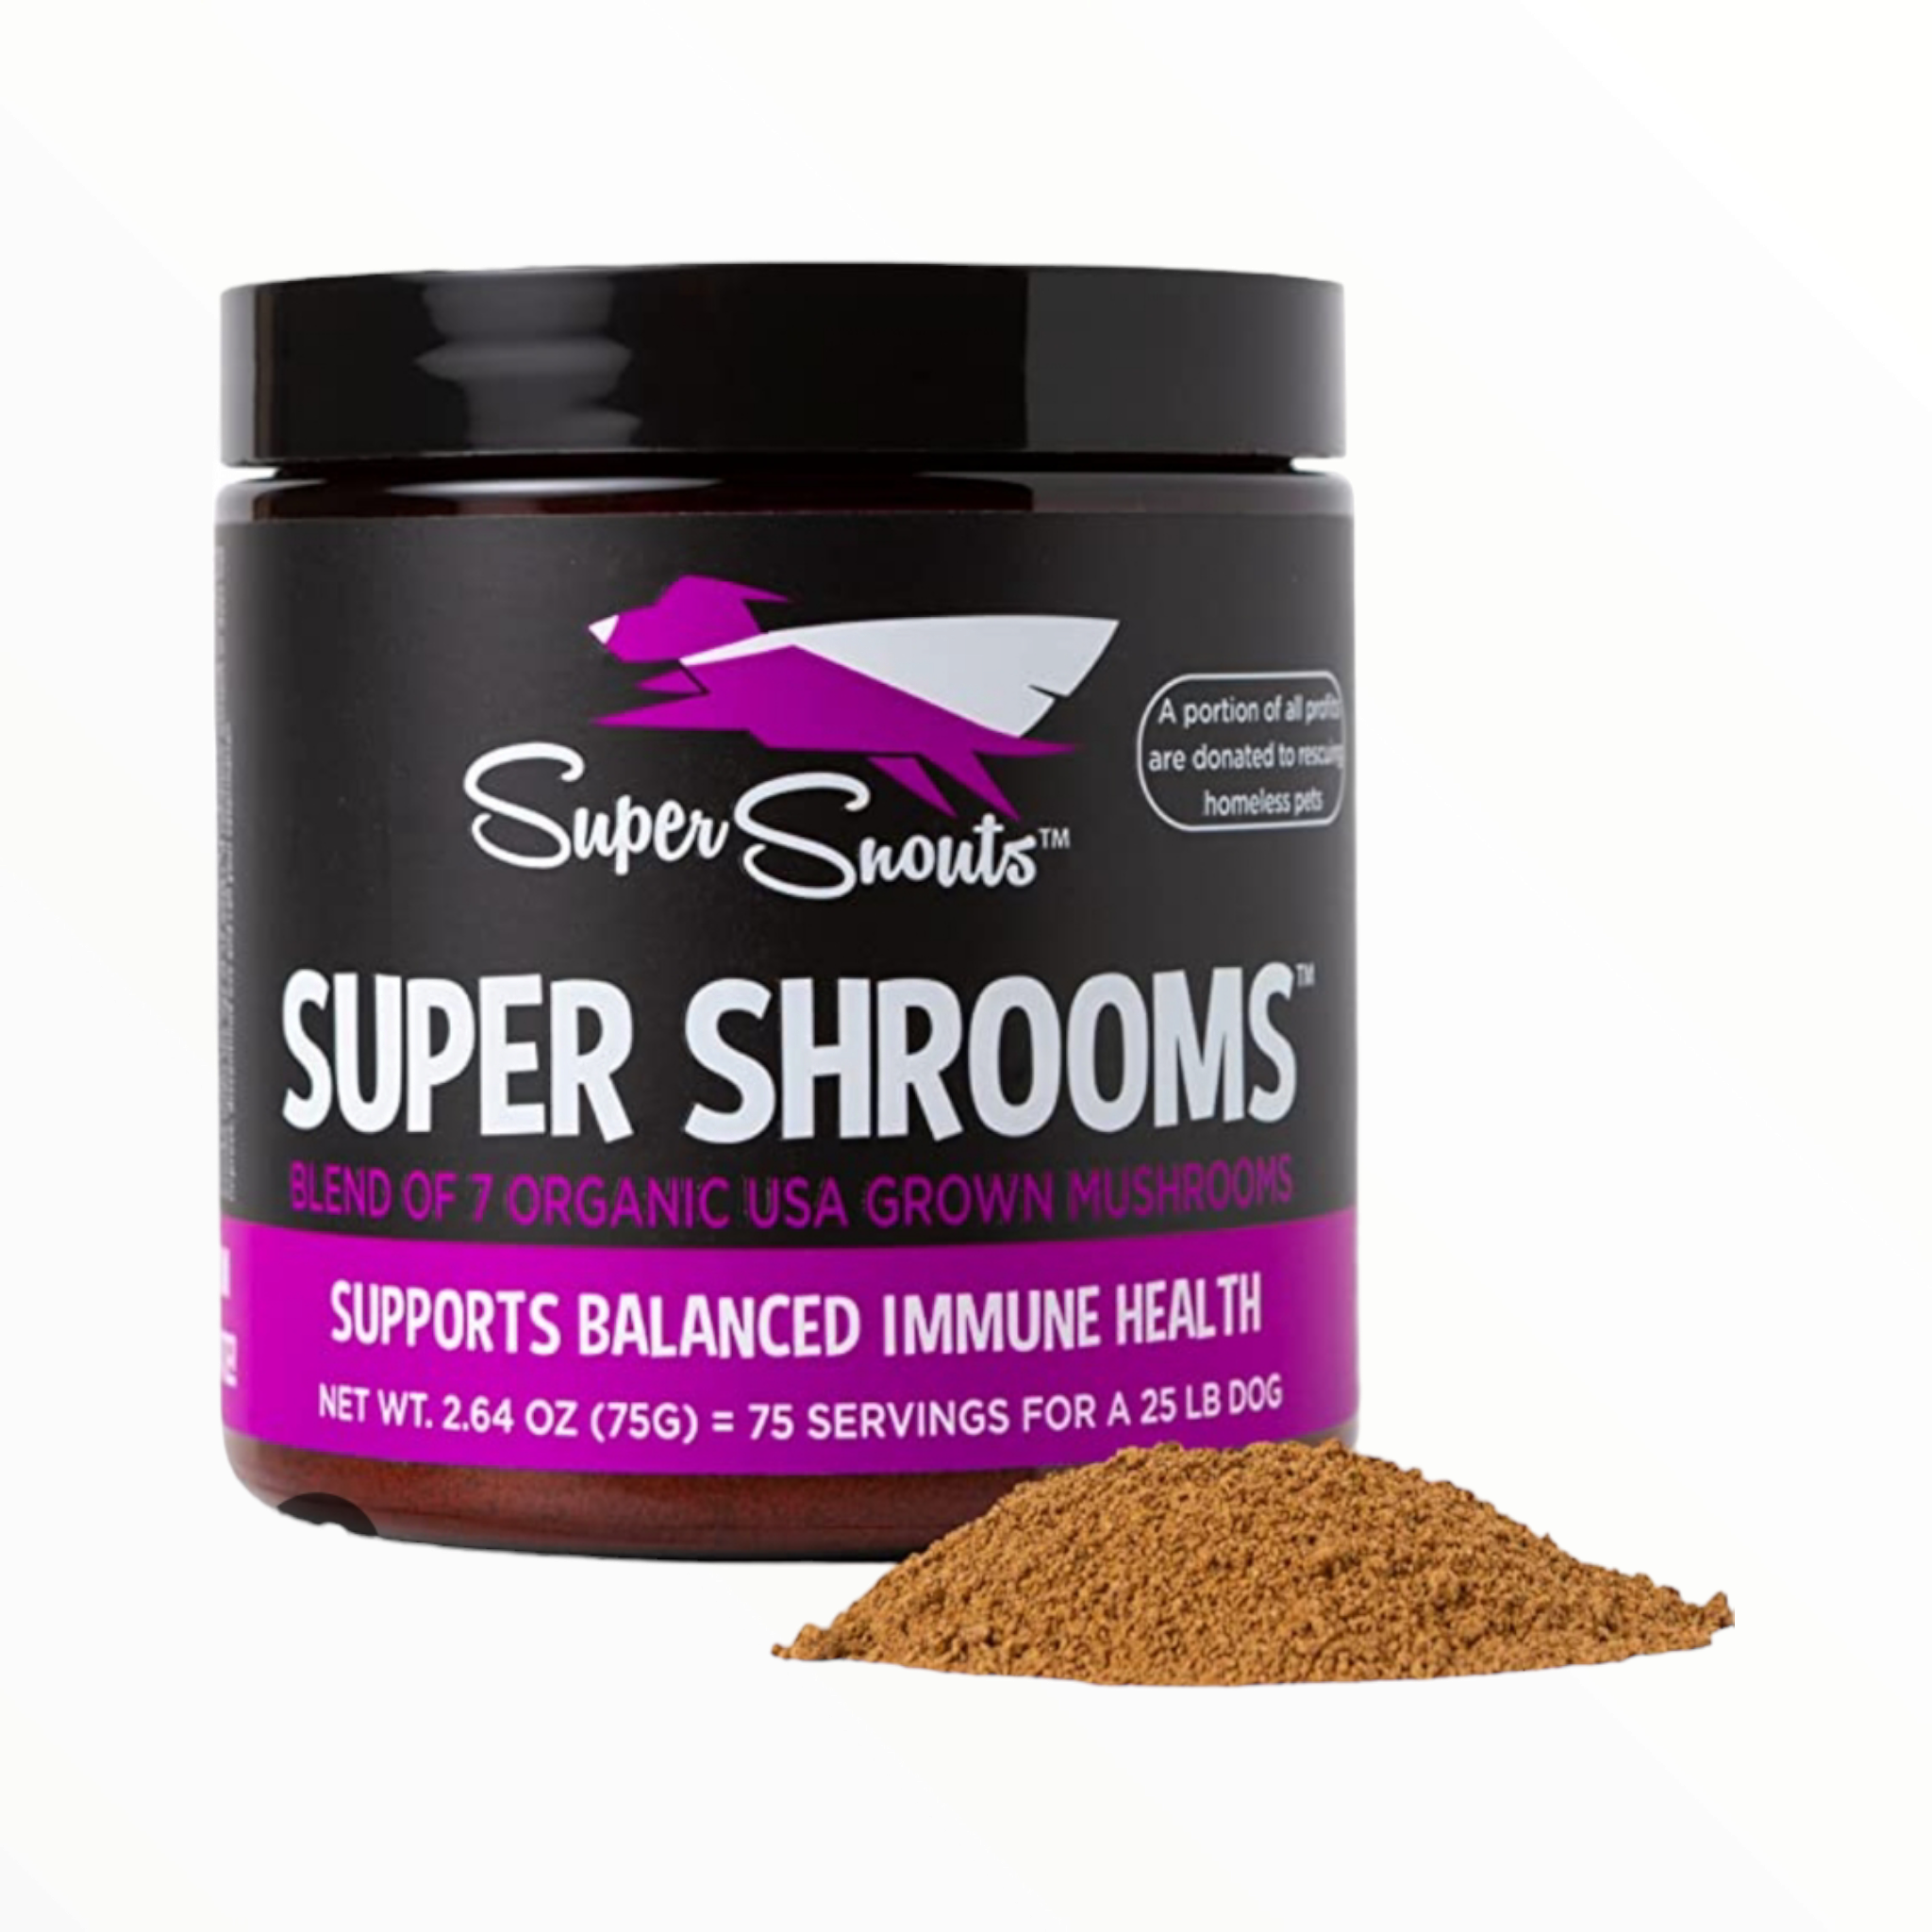 Super shrooms Hongos inmunomodulares